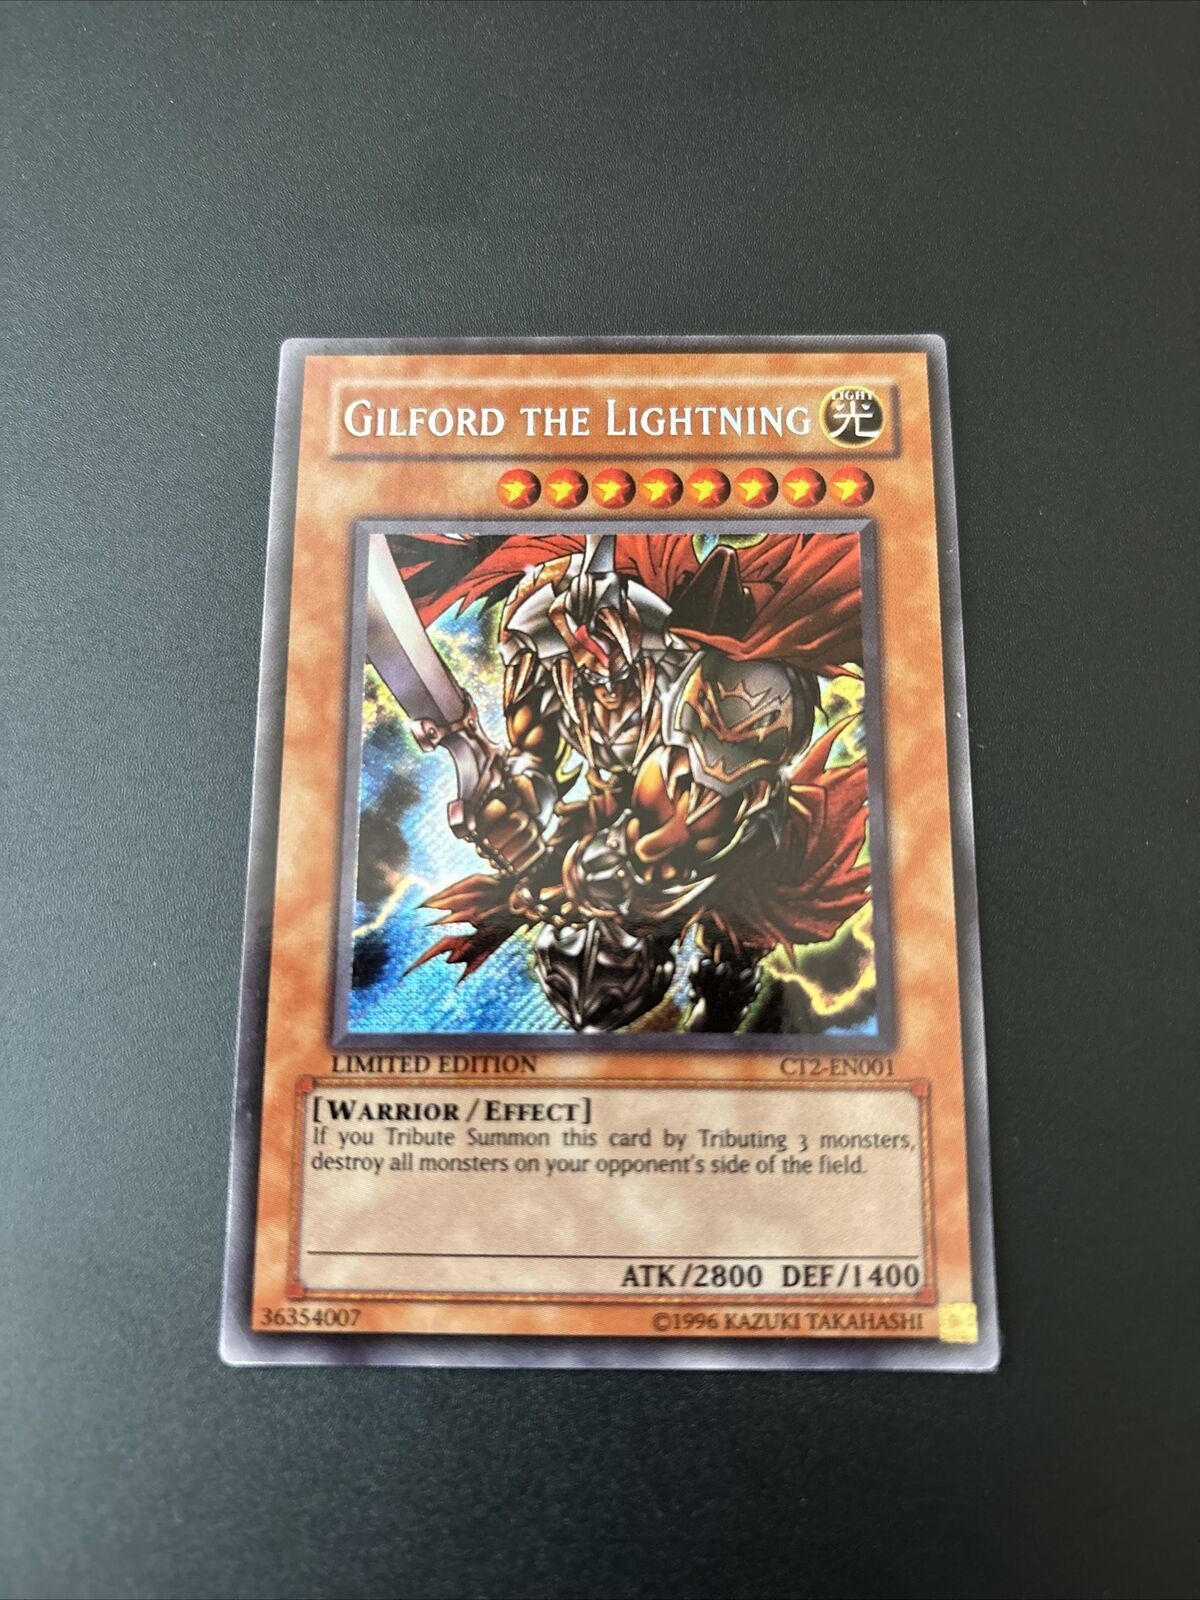 Gilford The Lightning CT2-EN001 Secret Rare Limited Edition NM / LP Yugioh Card